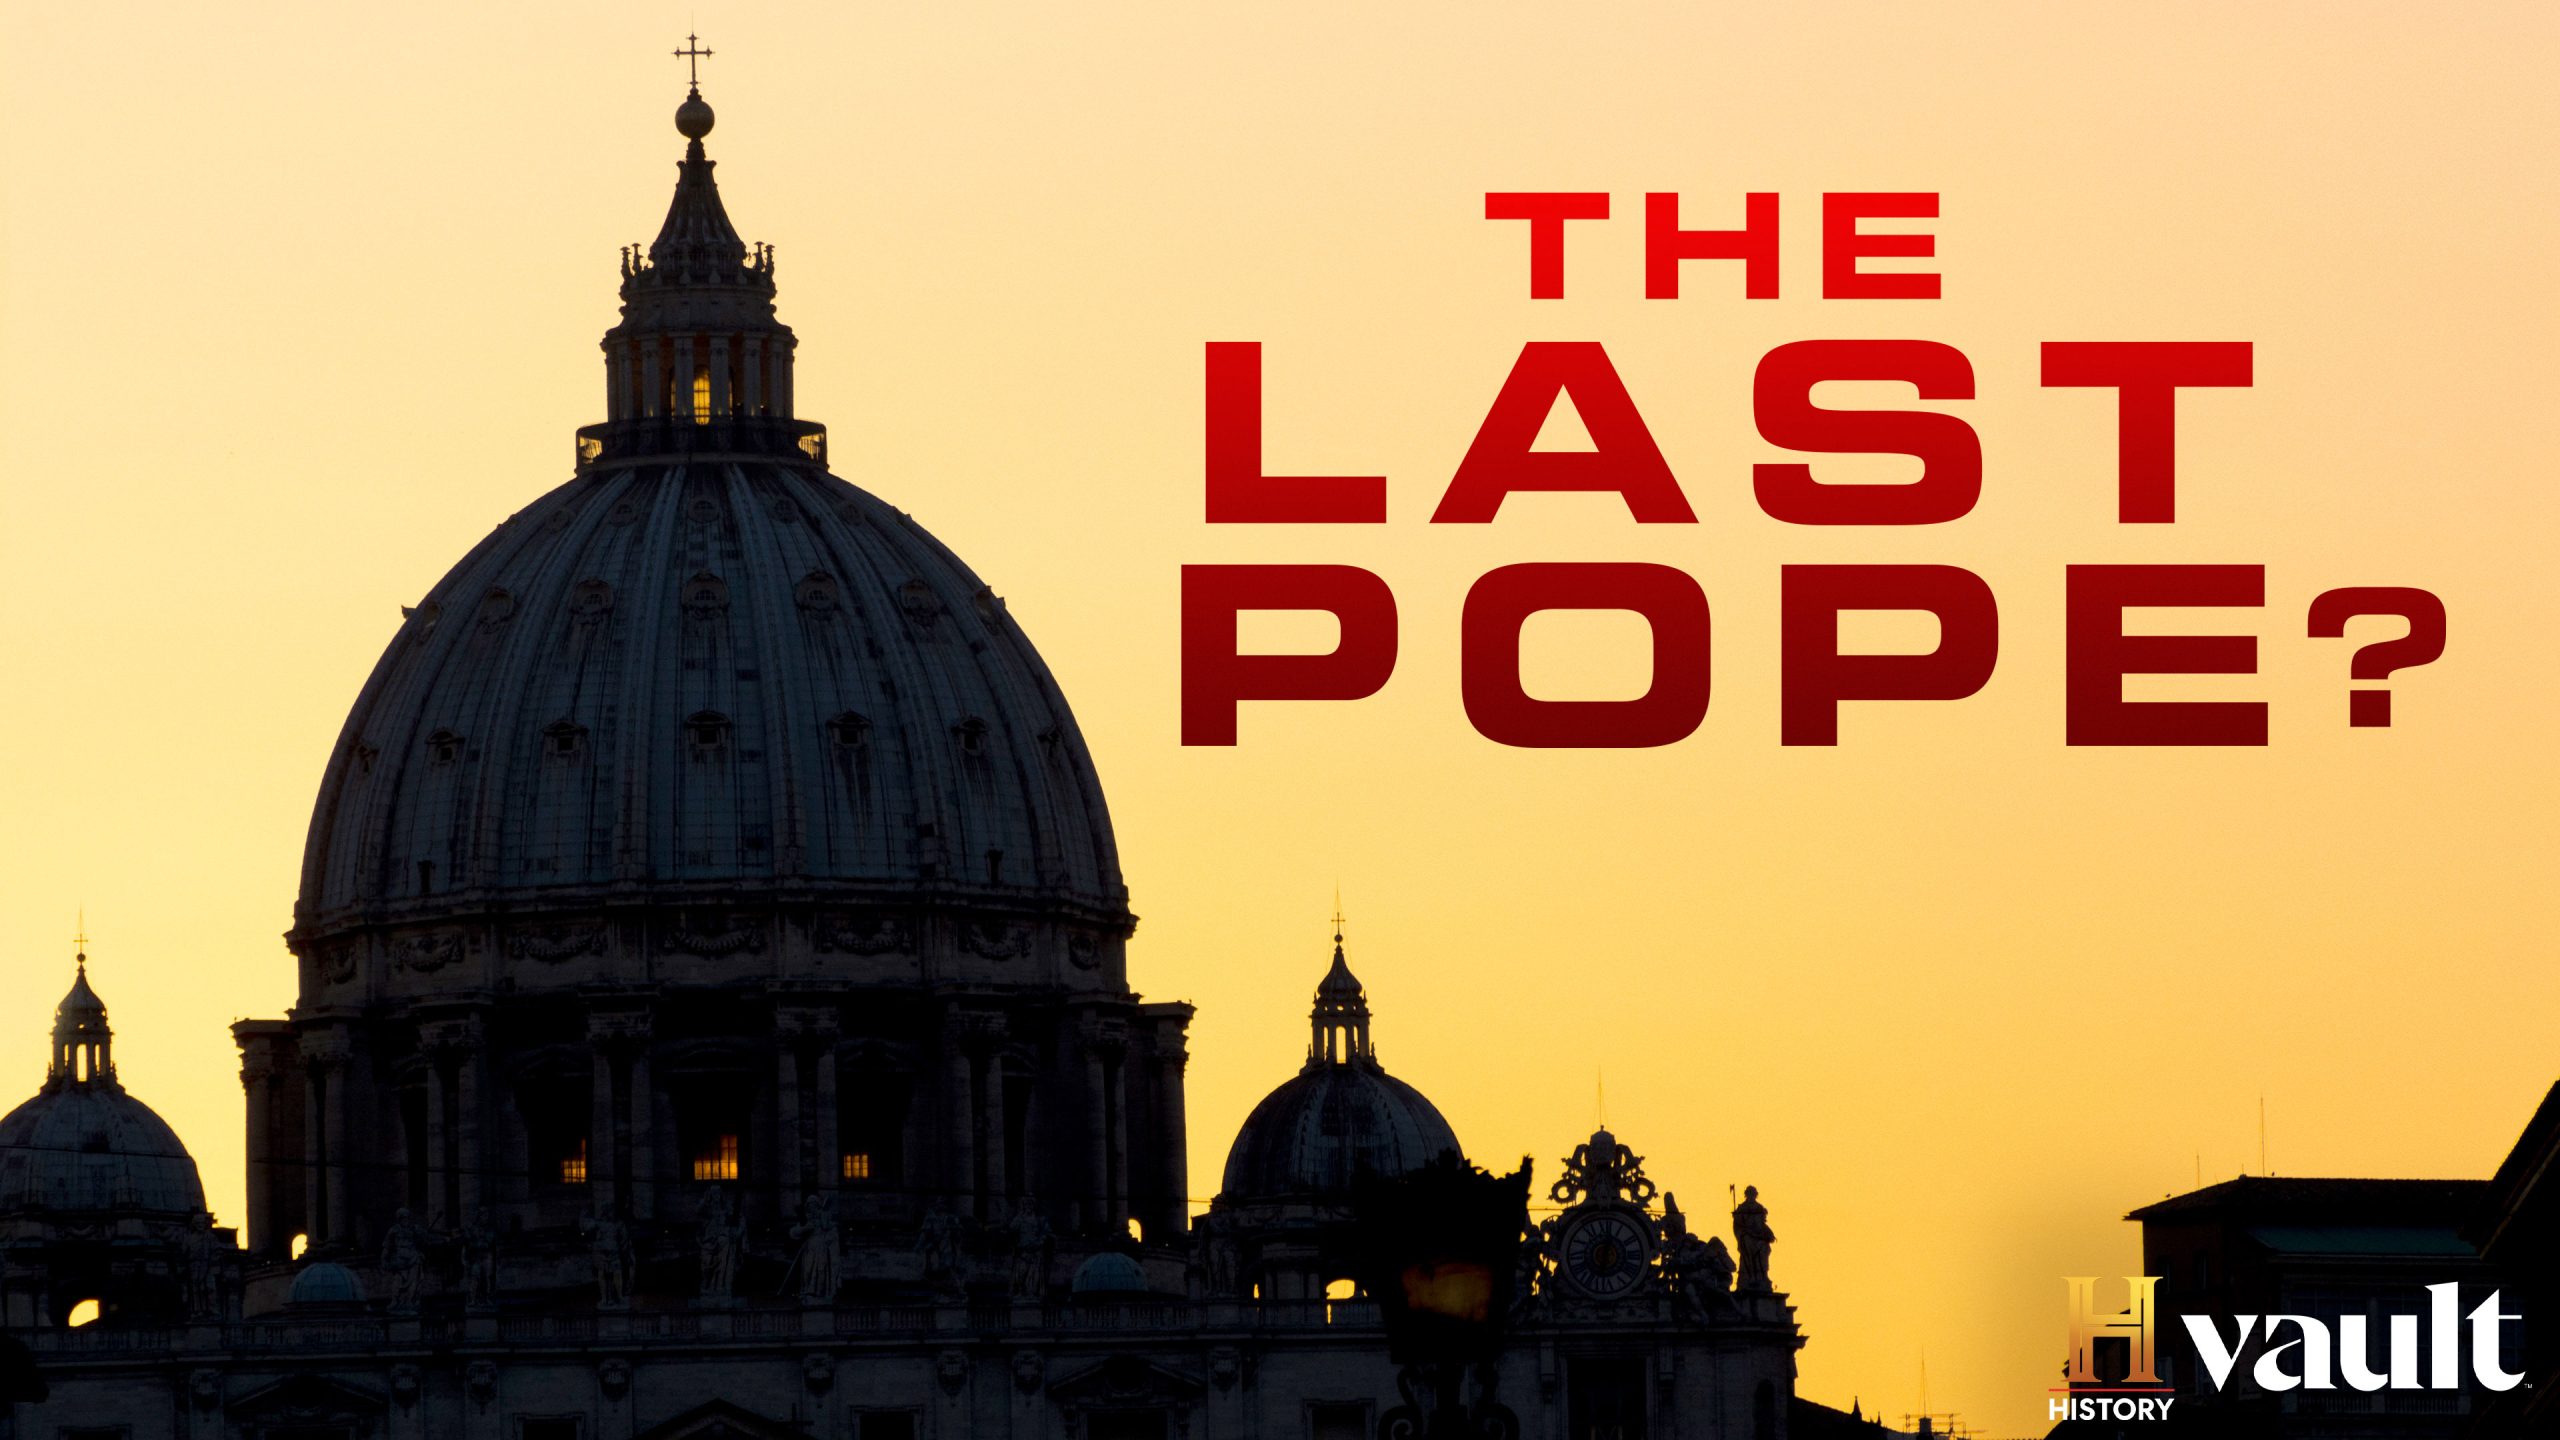 Watch The Last Pope? on HISTORY Vault